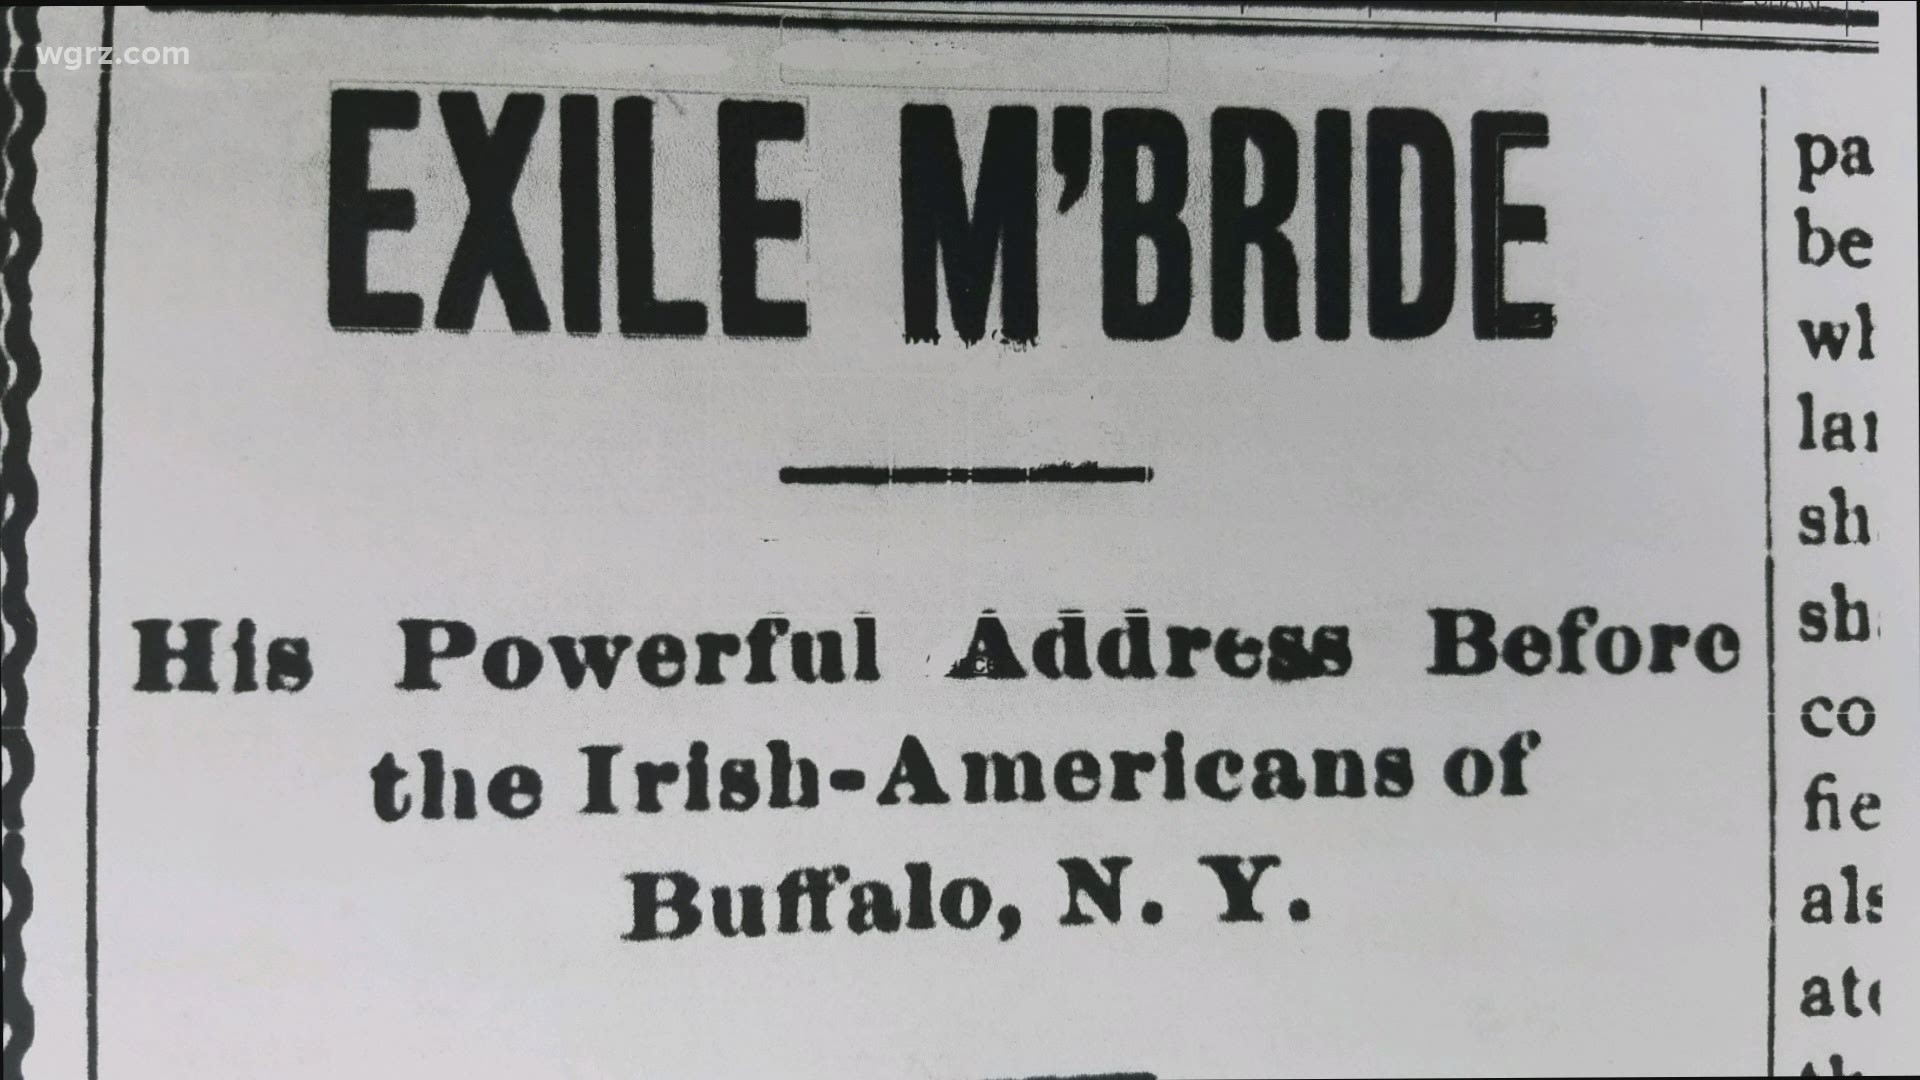 Unknown Stories: Exile McBride